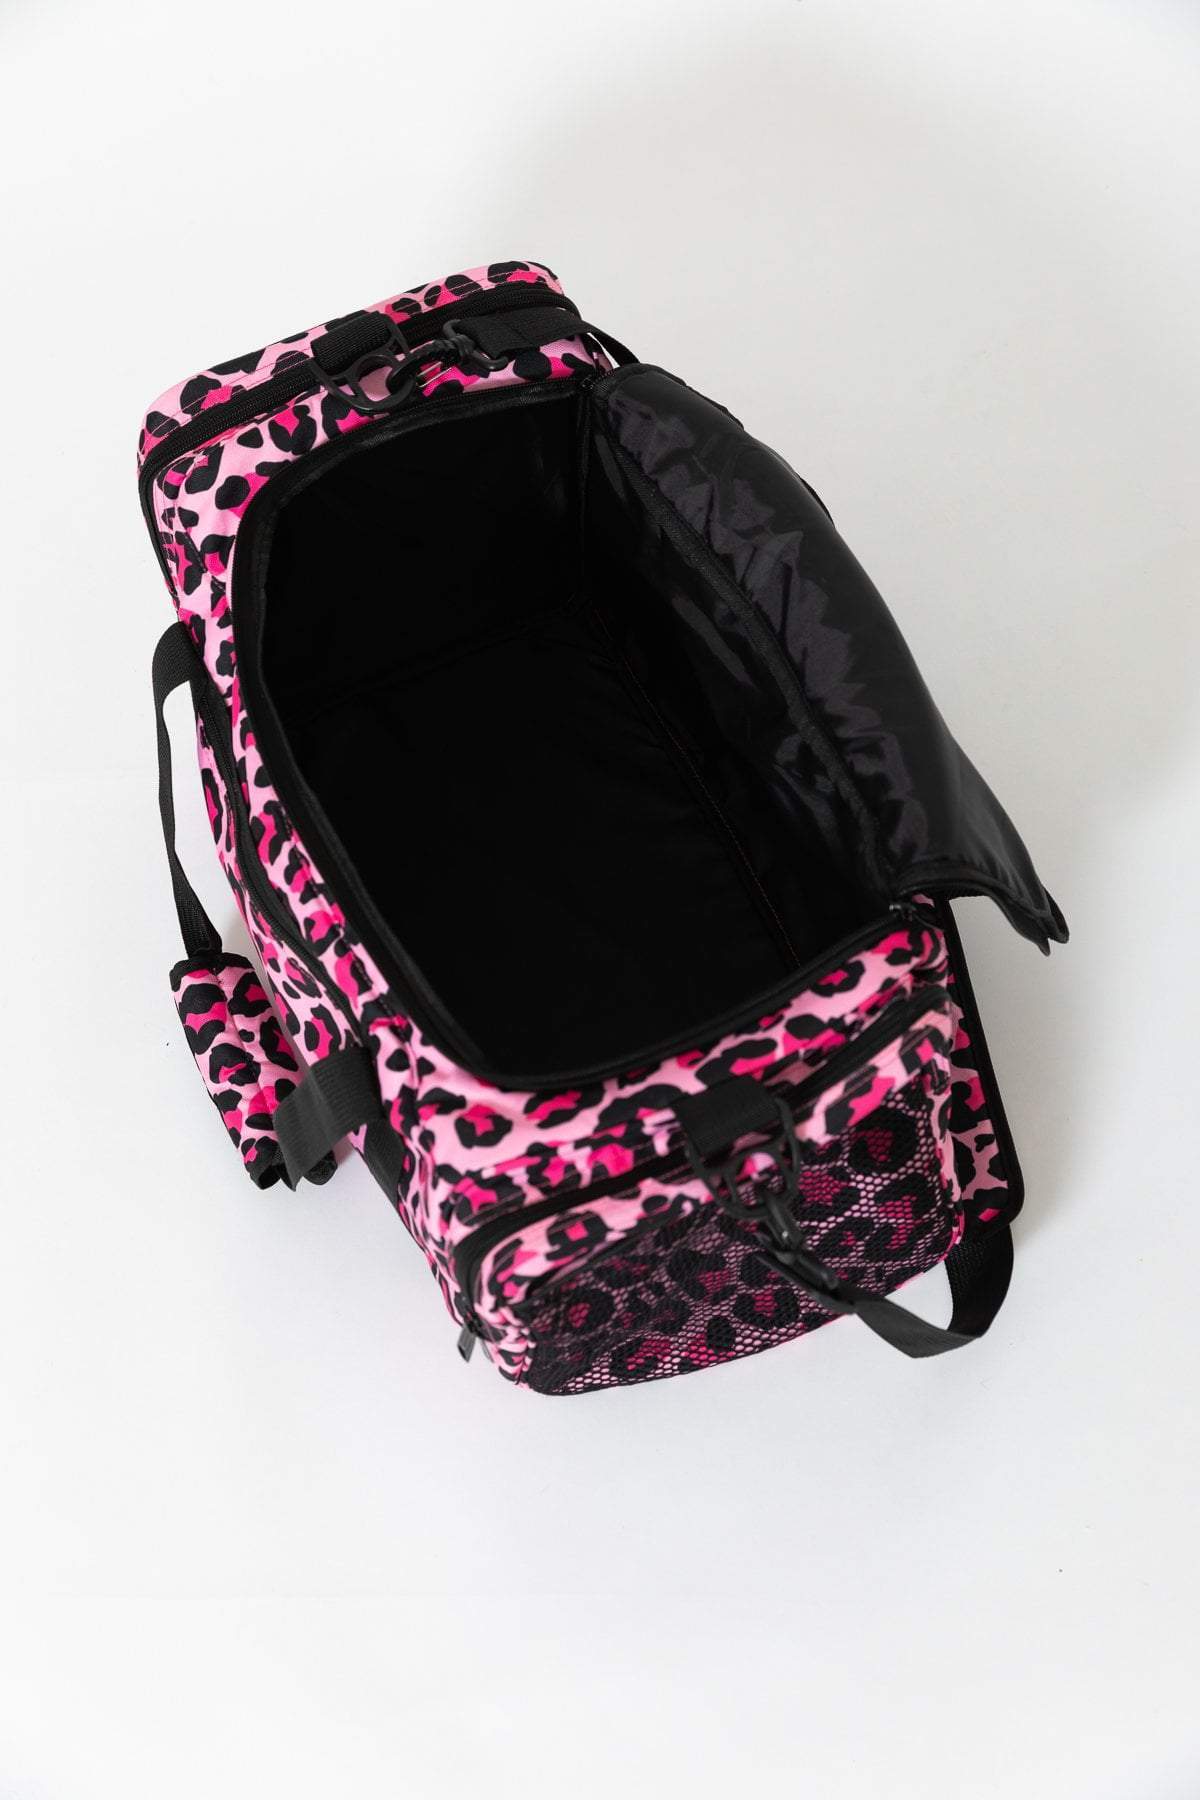 Deezi Active bag Bag Gym Bag Pink Leopard